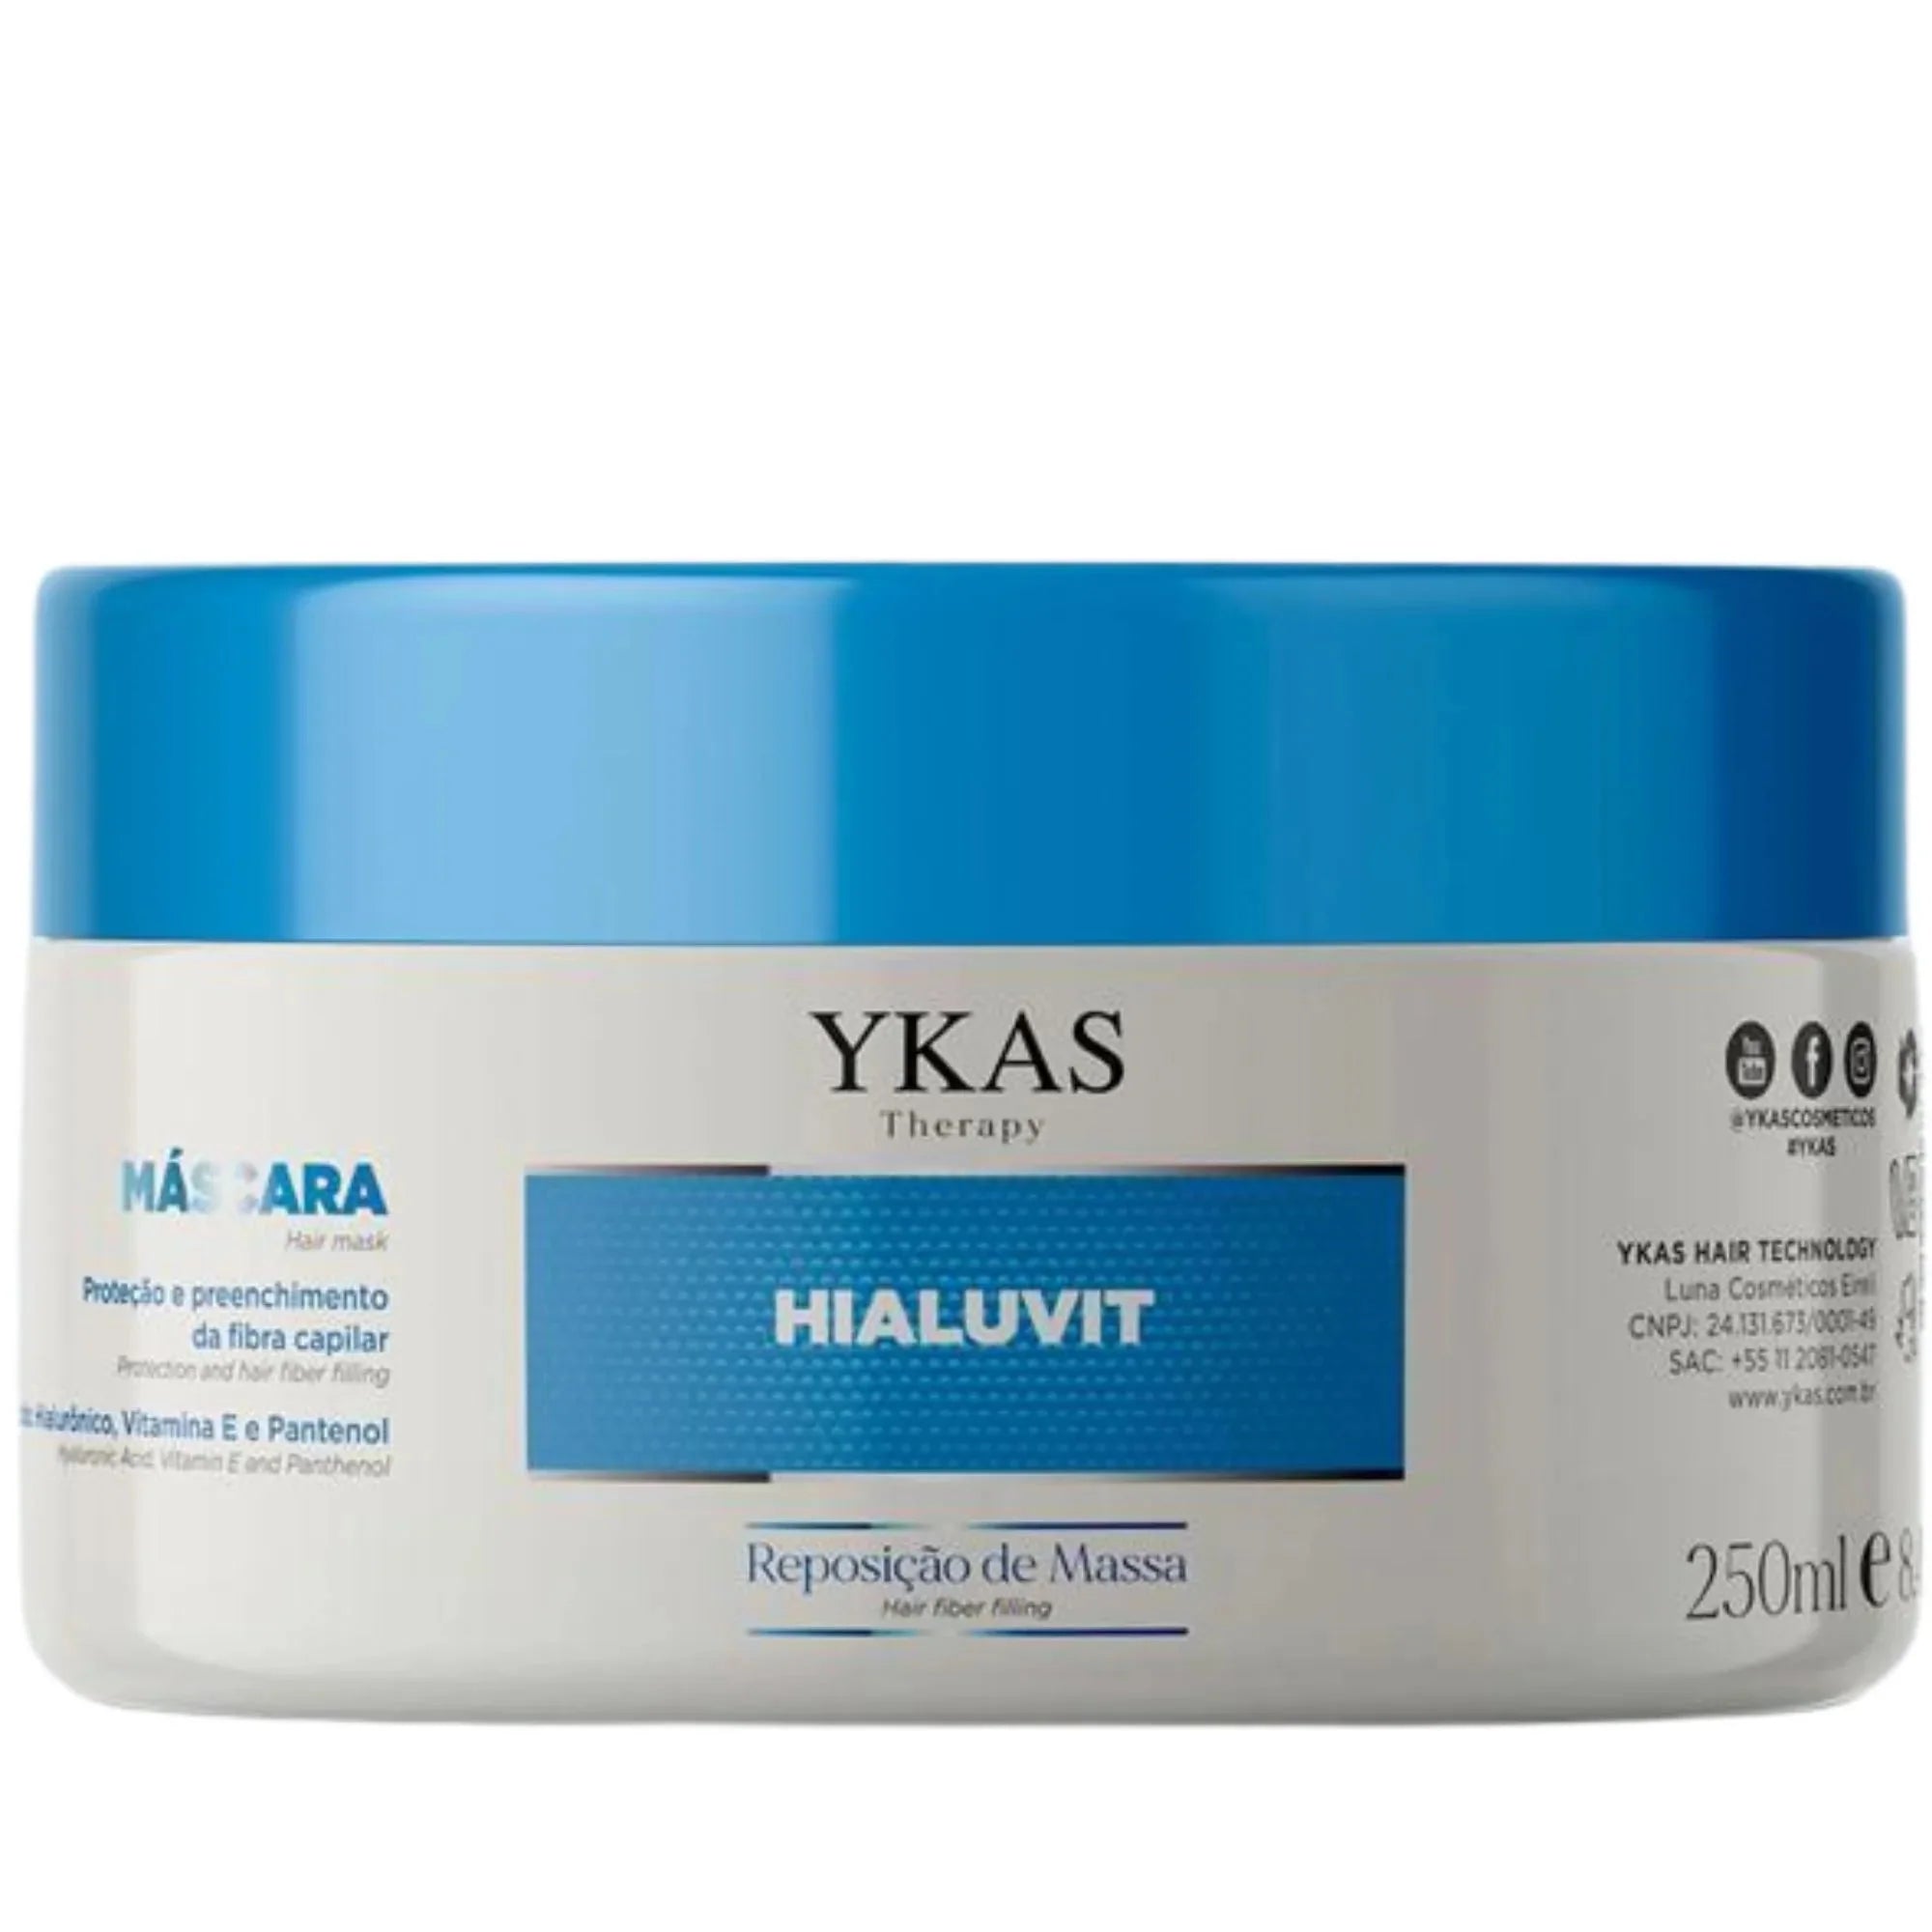 Ykas Hair Mask Ykas Hialuvit Therapy Mask 250ml / 8.4 fl oz